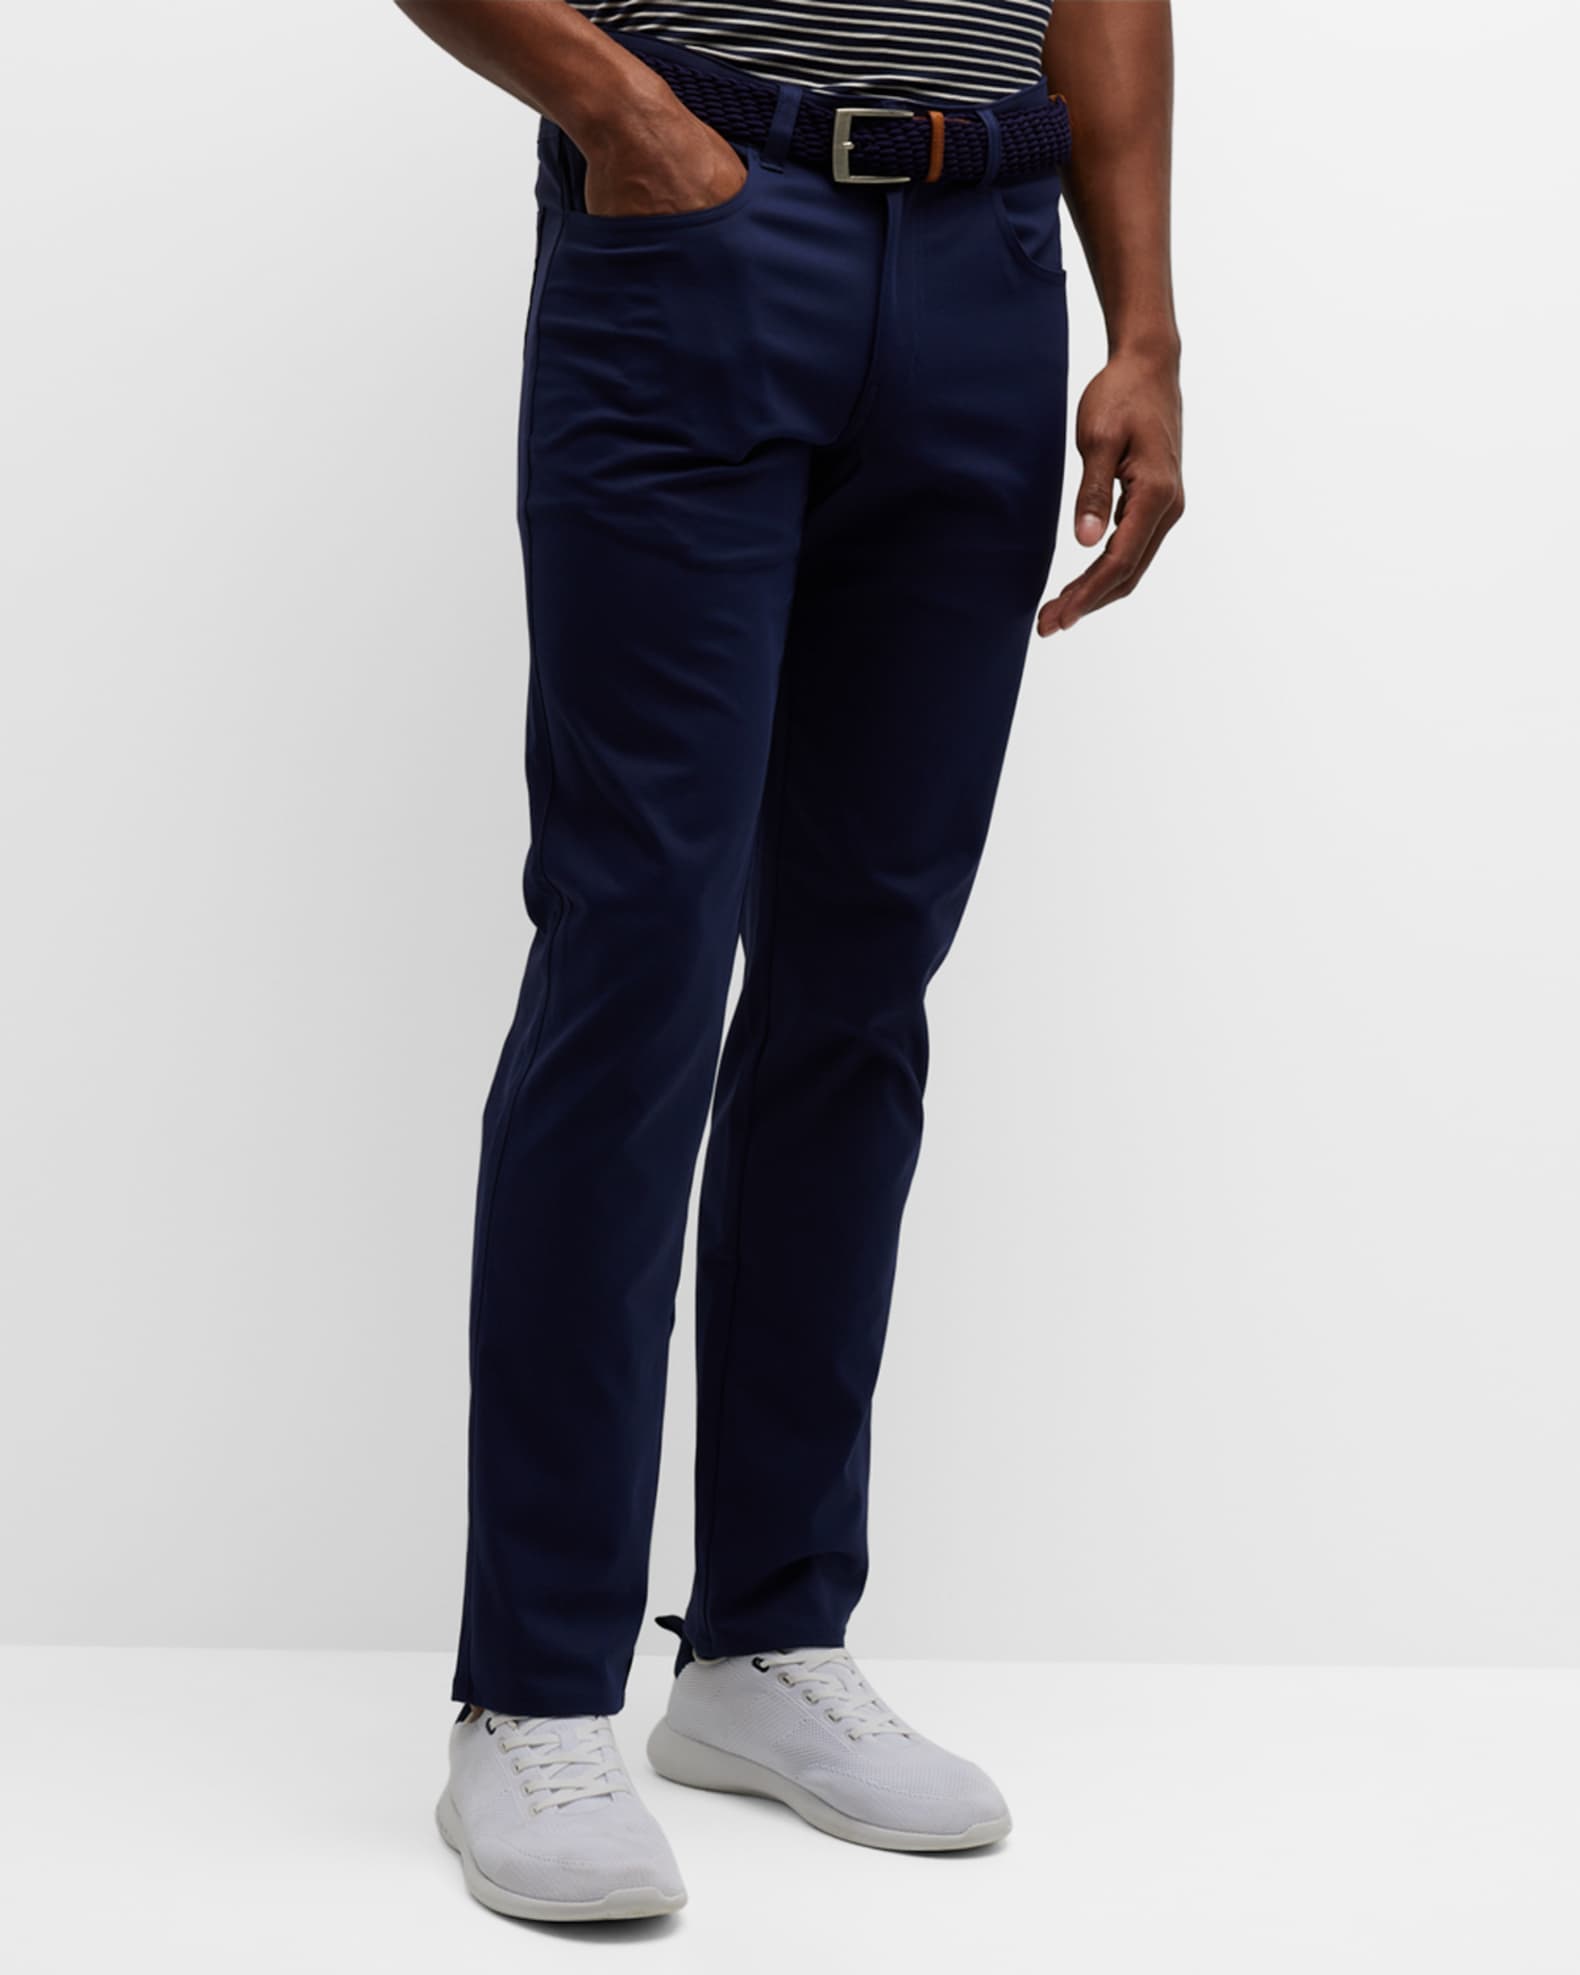 Peter Millar Men's EB66 5-Pocket Performance Pants | Neiman Marcus